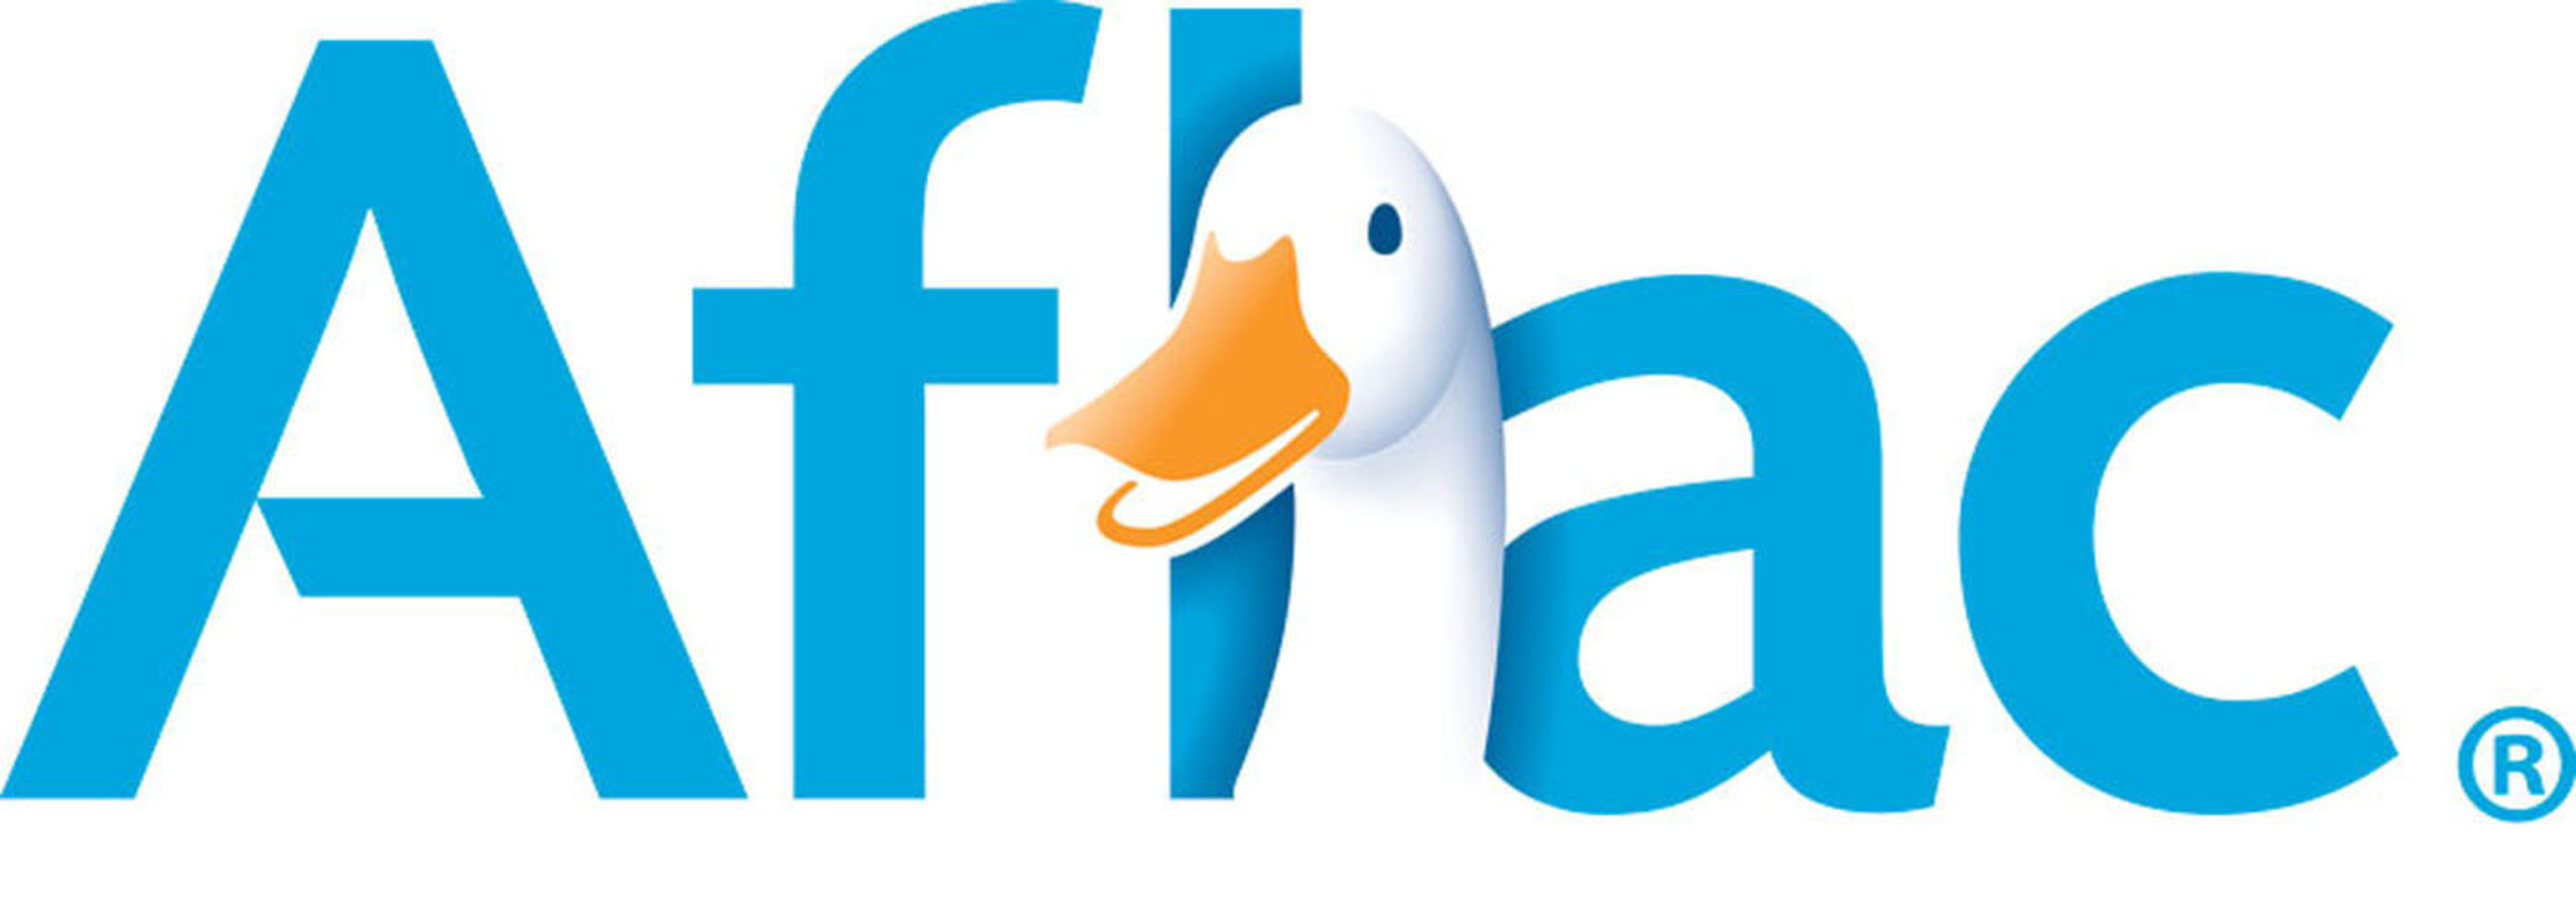 Aflac Logo.